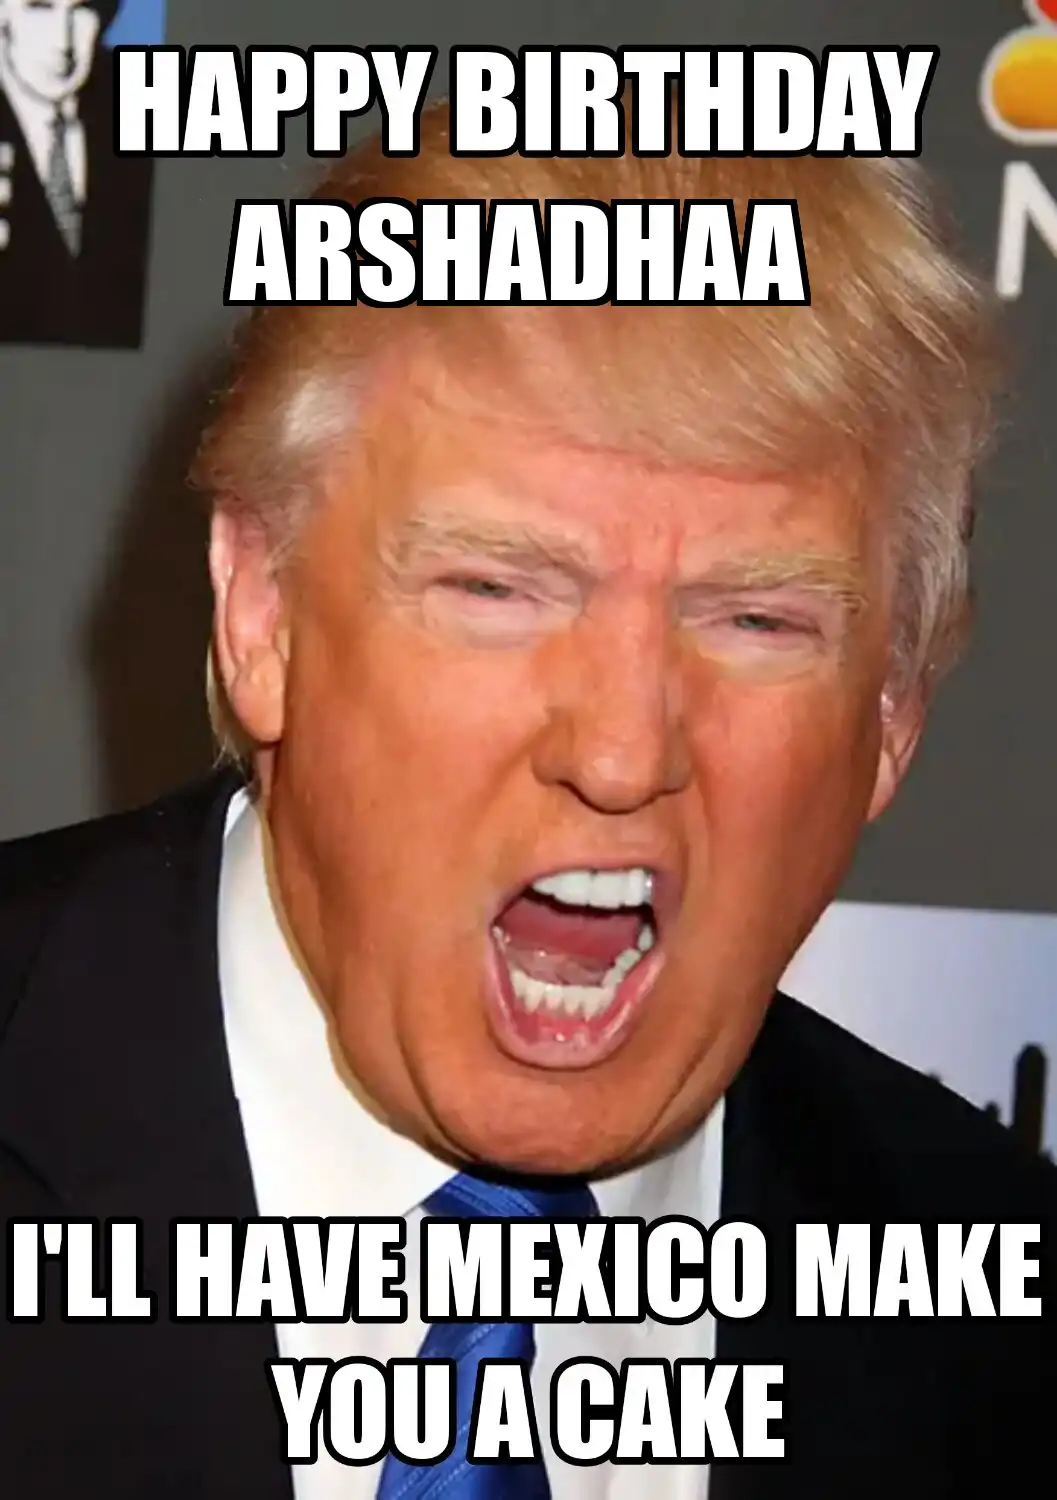 Happy Birthday Arshadhaa Mexico Make You A Cake Meme